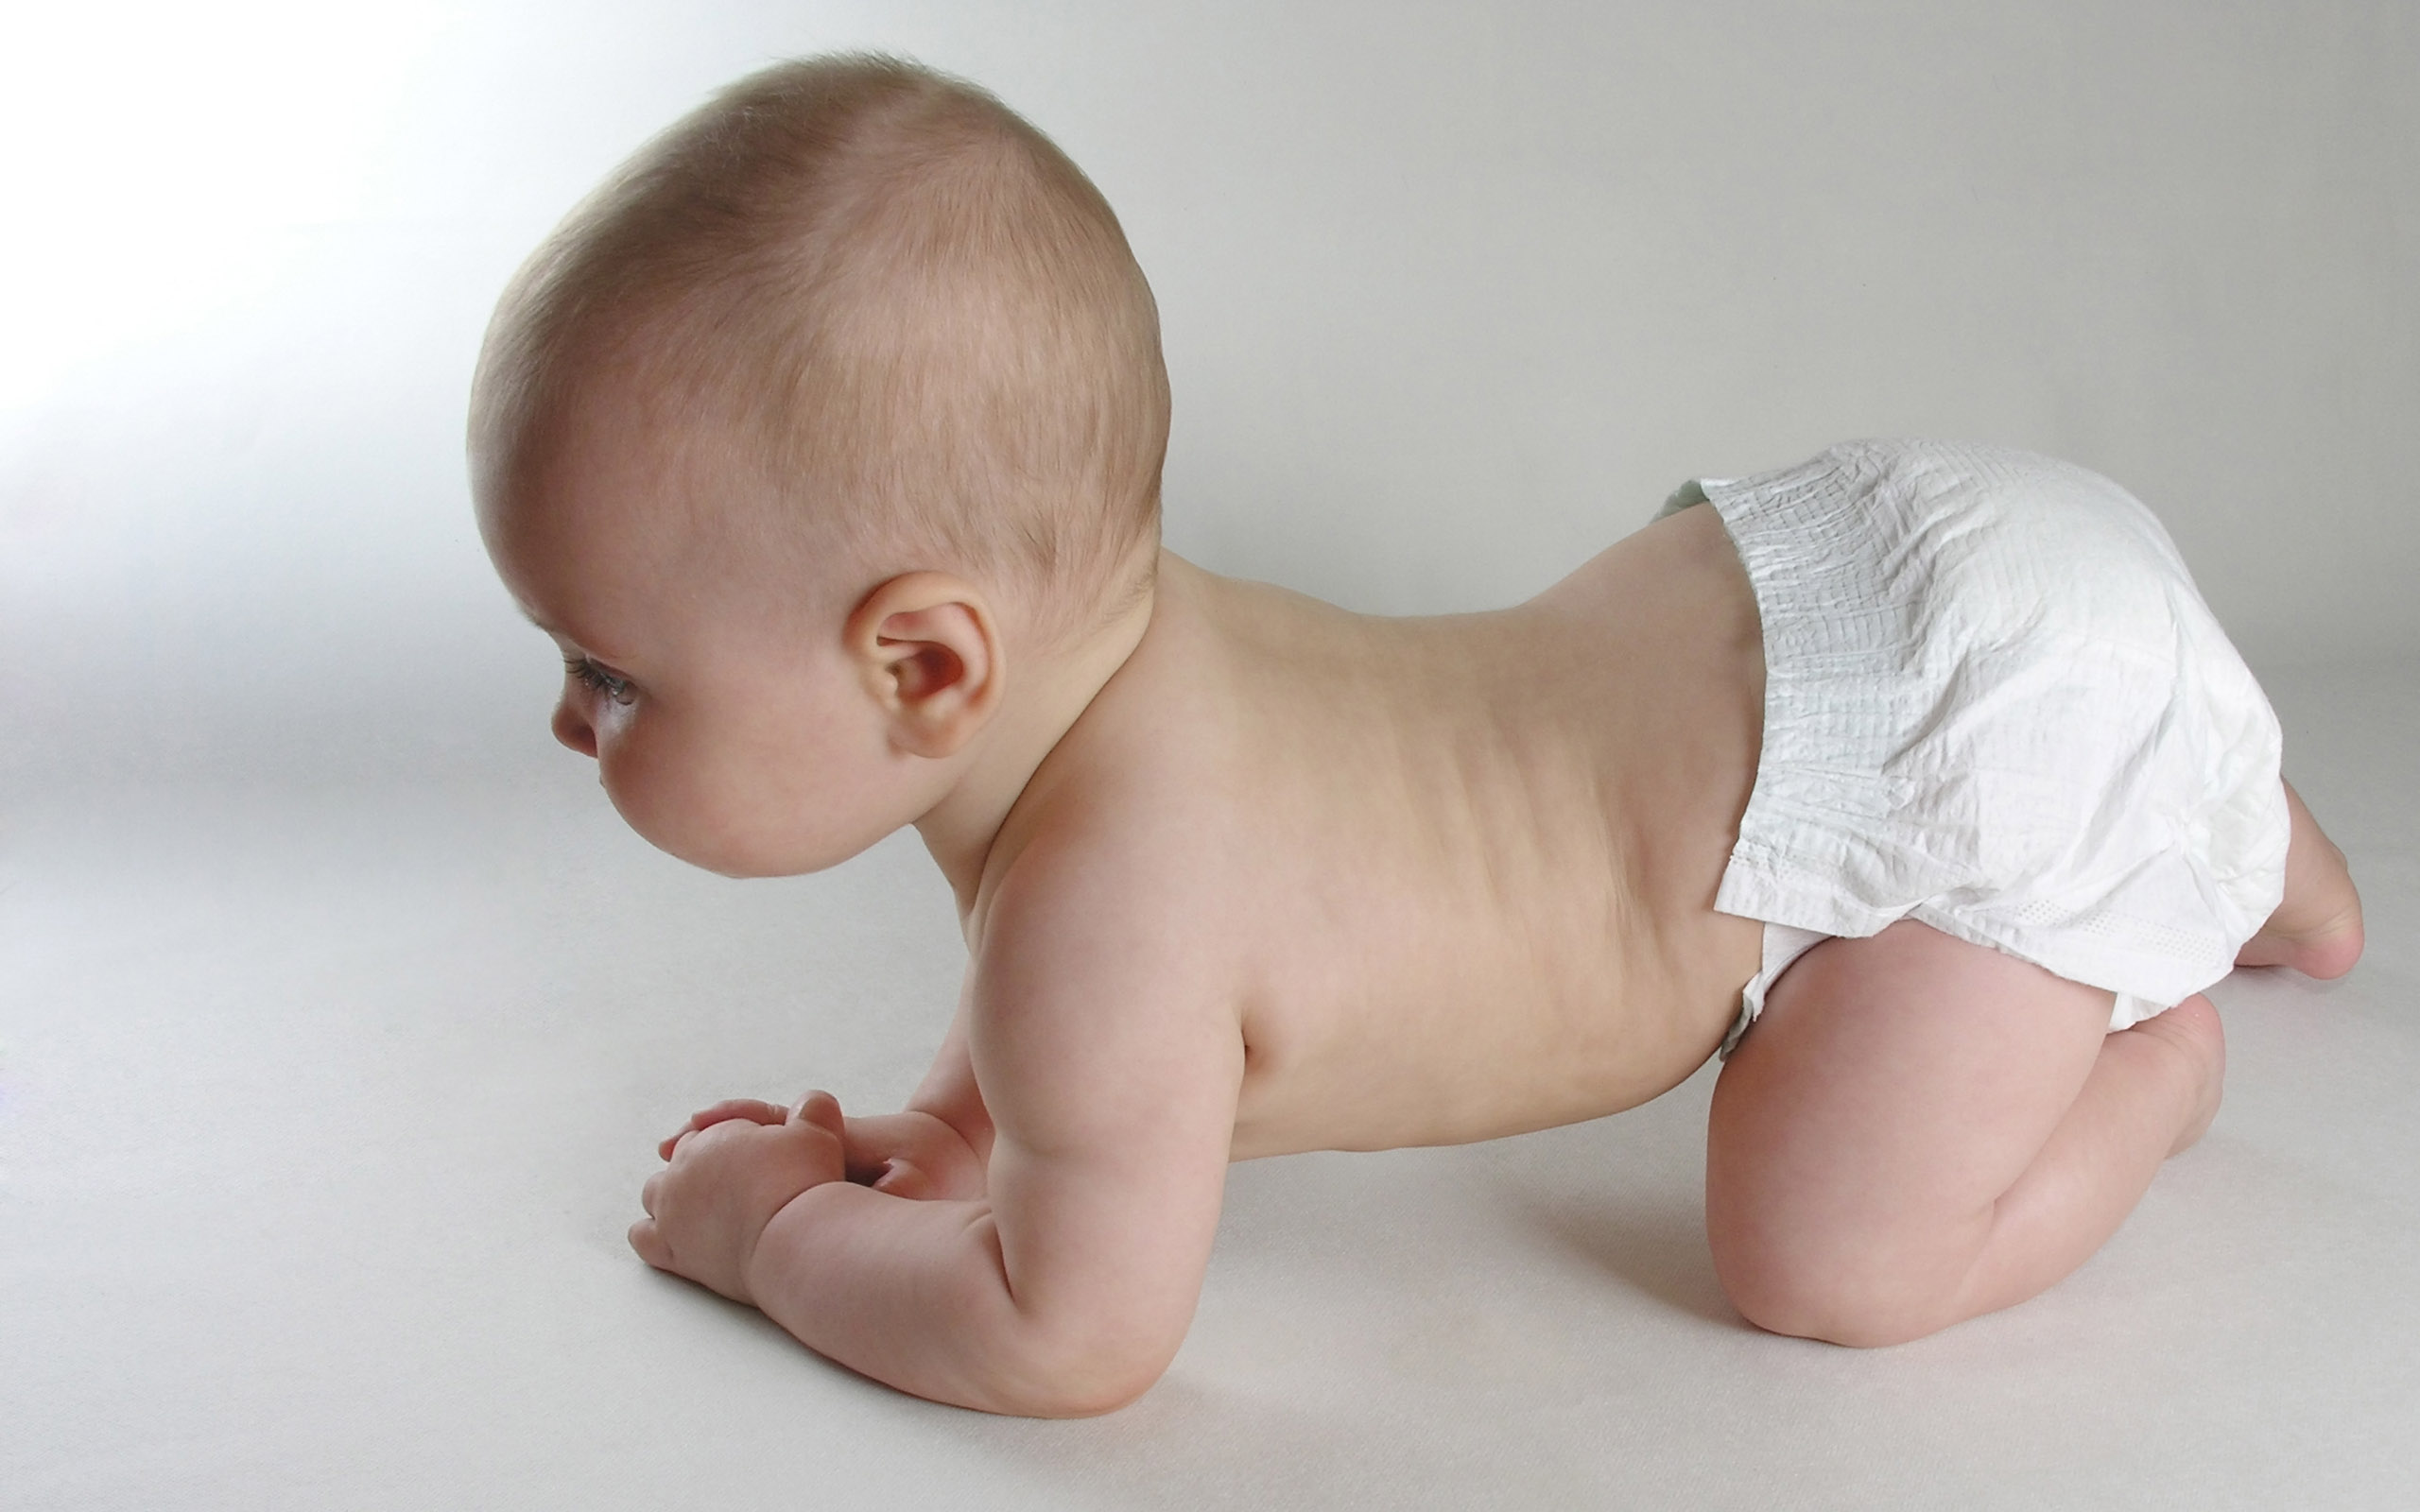 a baby diaper